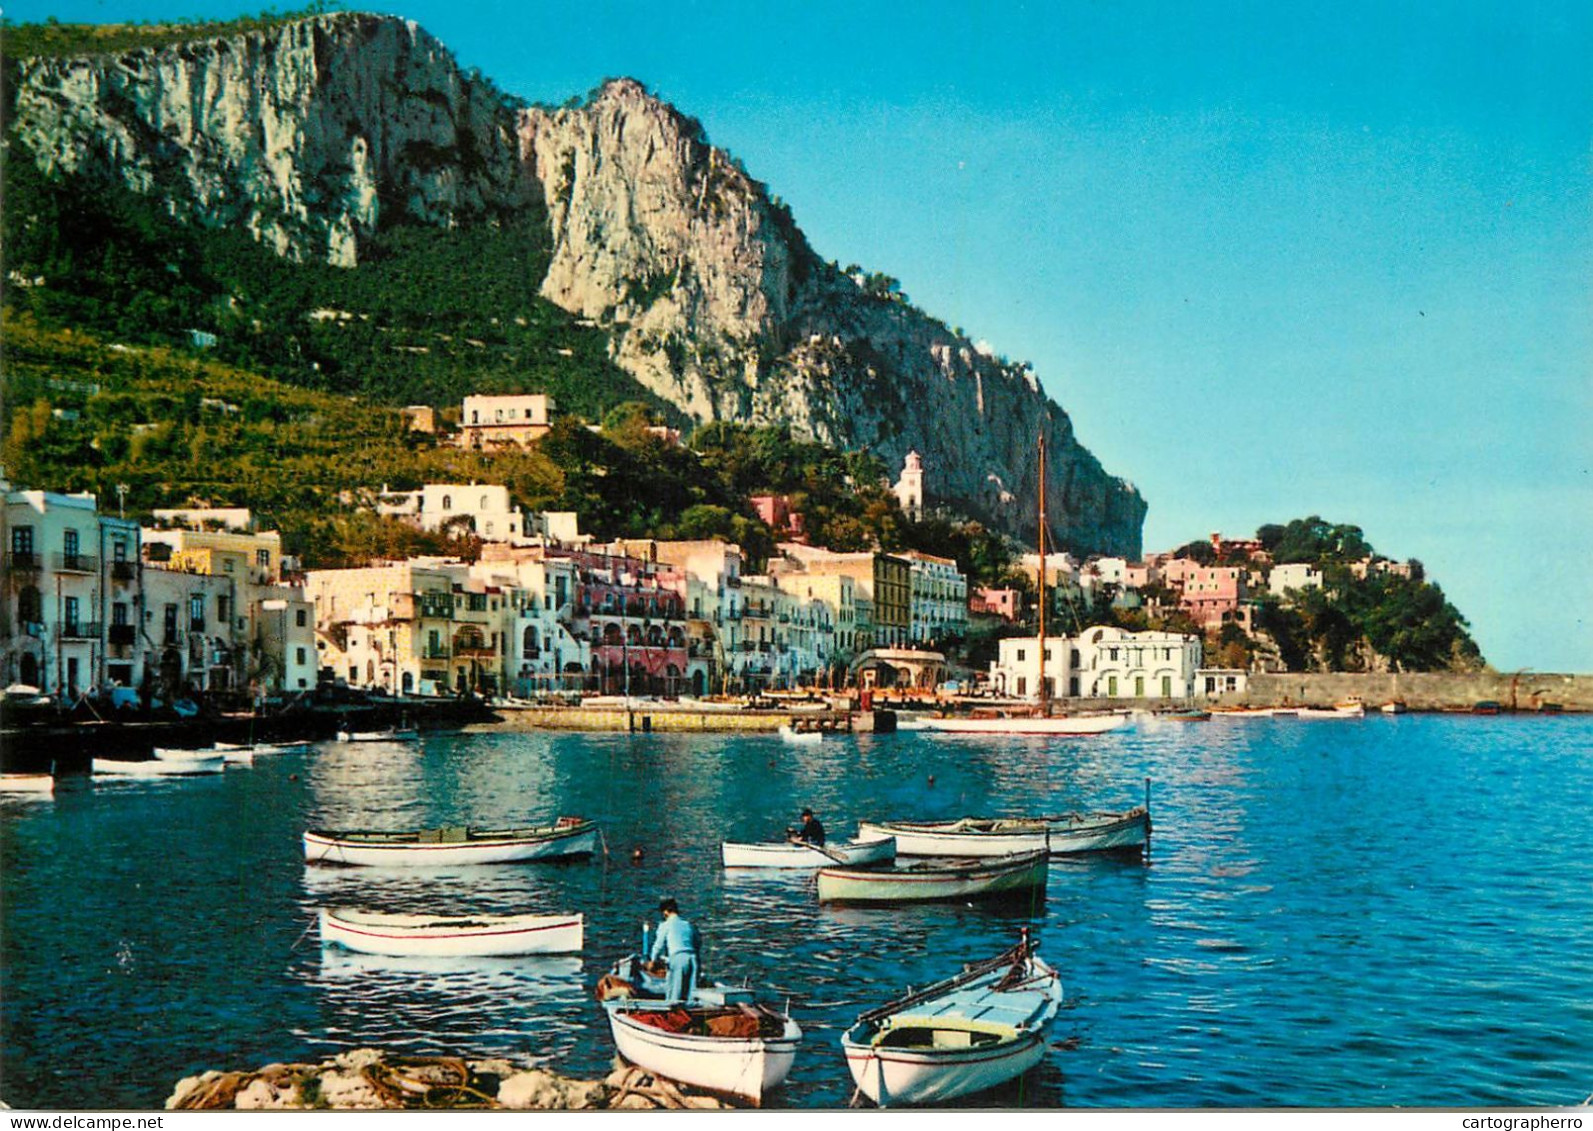 Navigation Sailing Vessels & Boats Themed Postcard Capri Marina Grande - Voiliers